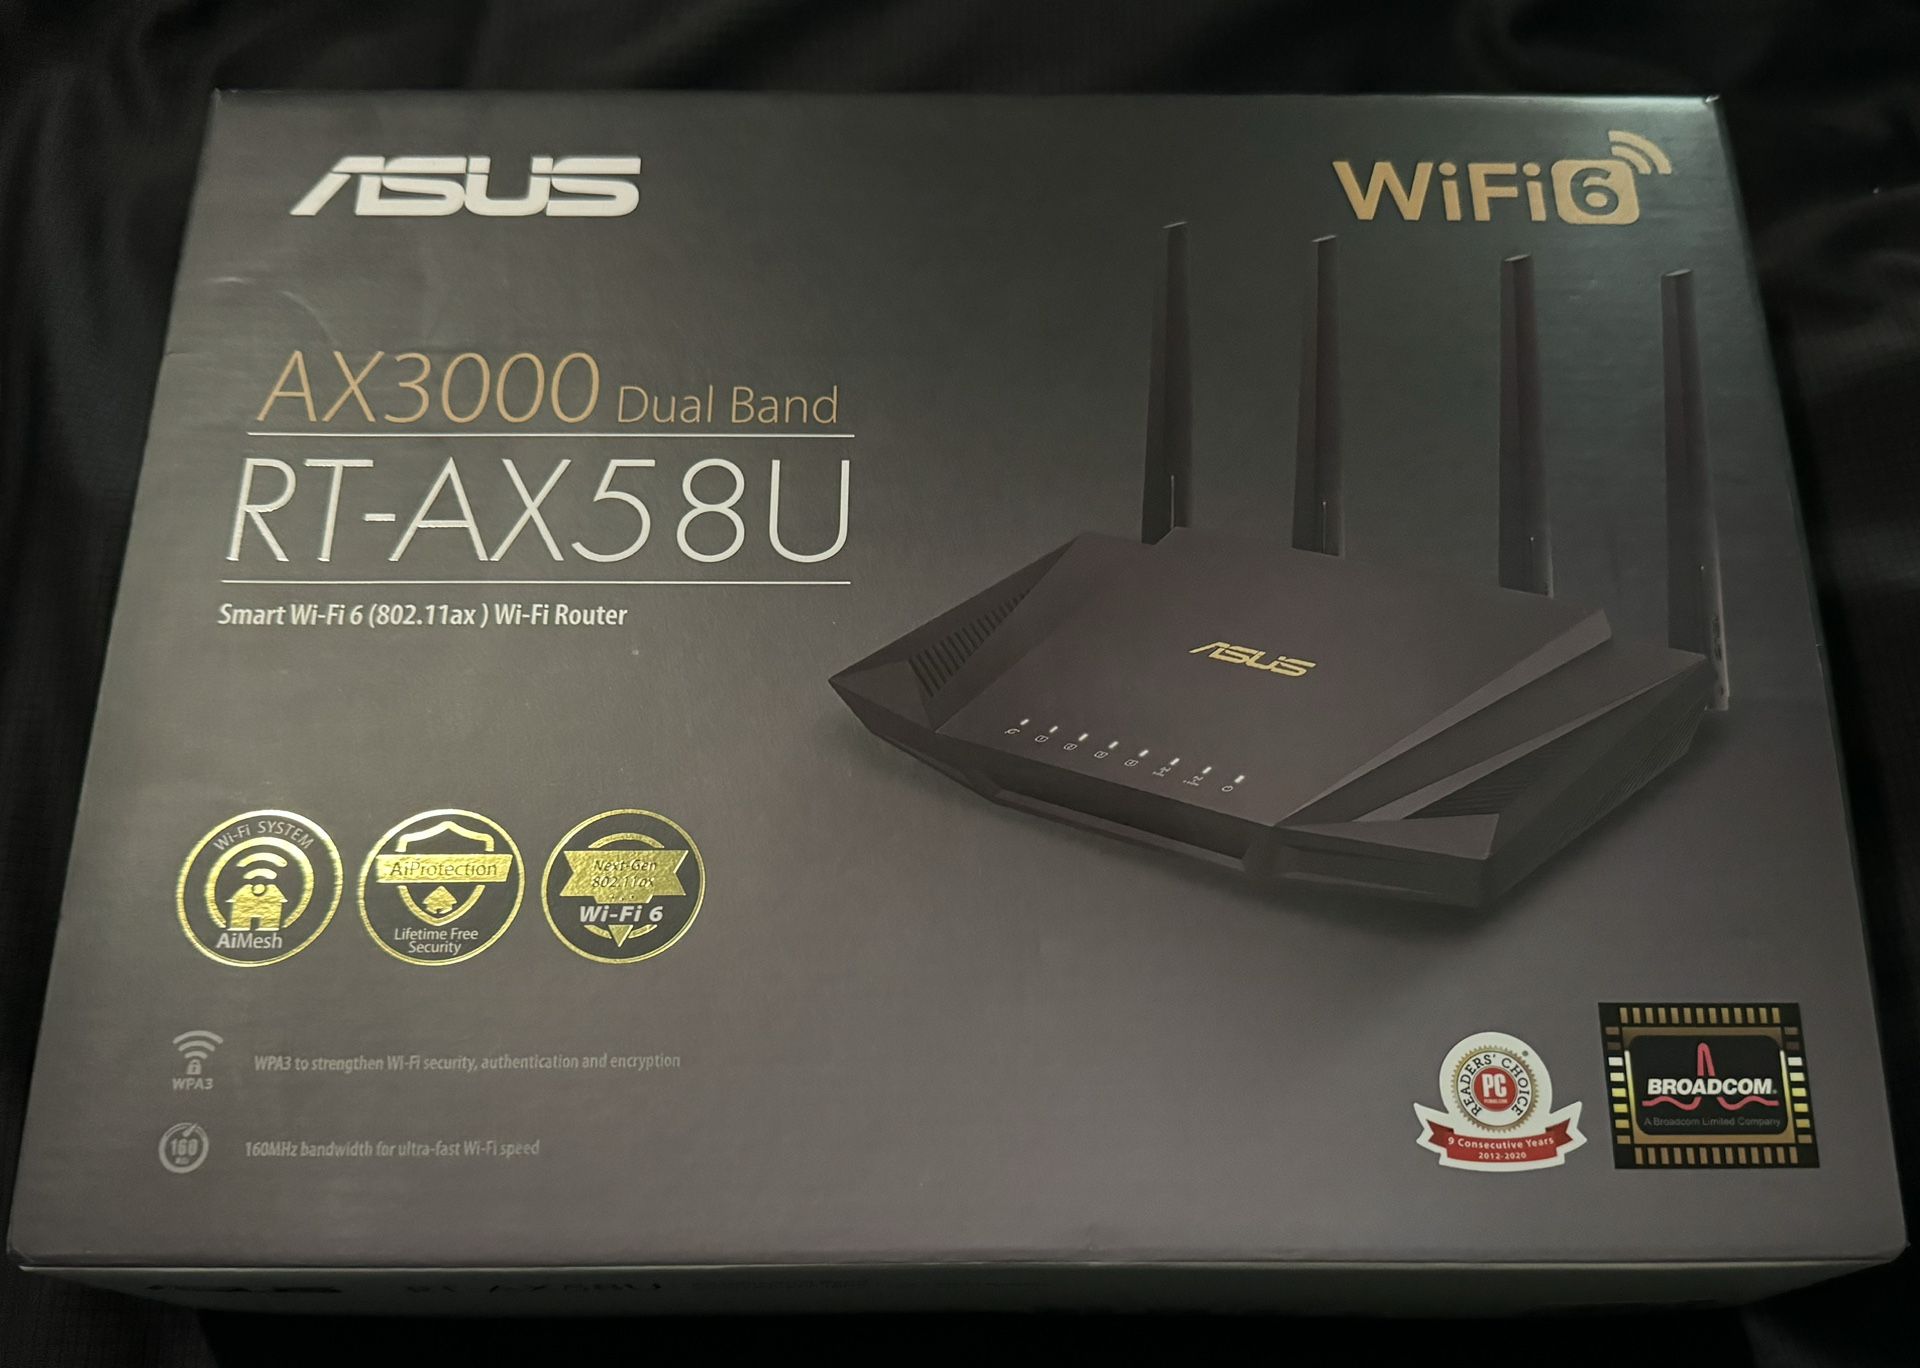 ASUS WiFi Router RT-AX58U - AX3000 Dual Band - Smart Wifi 6 